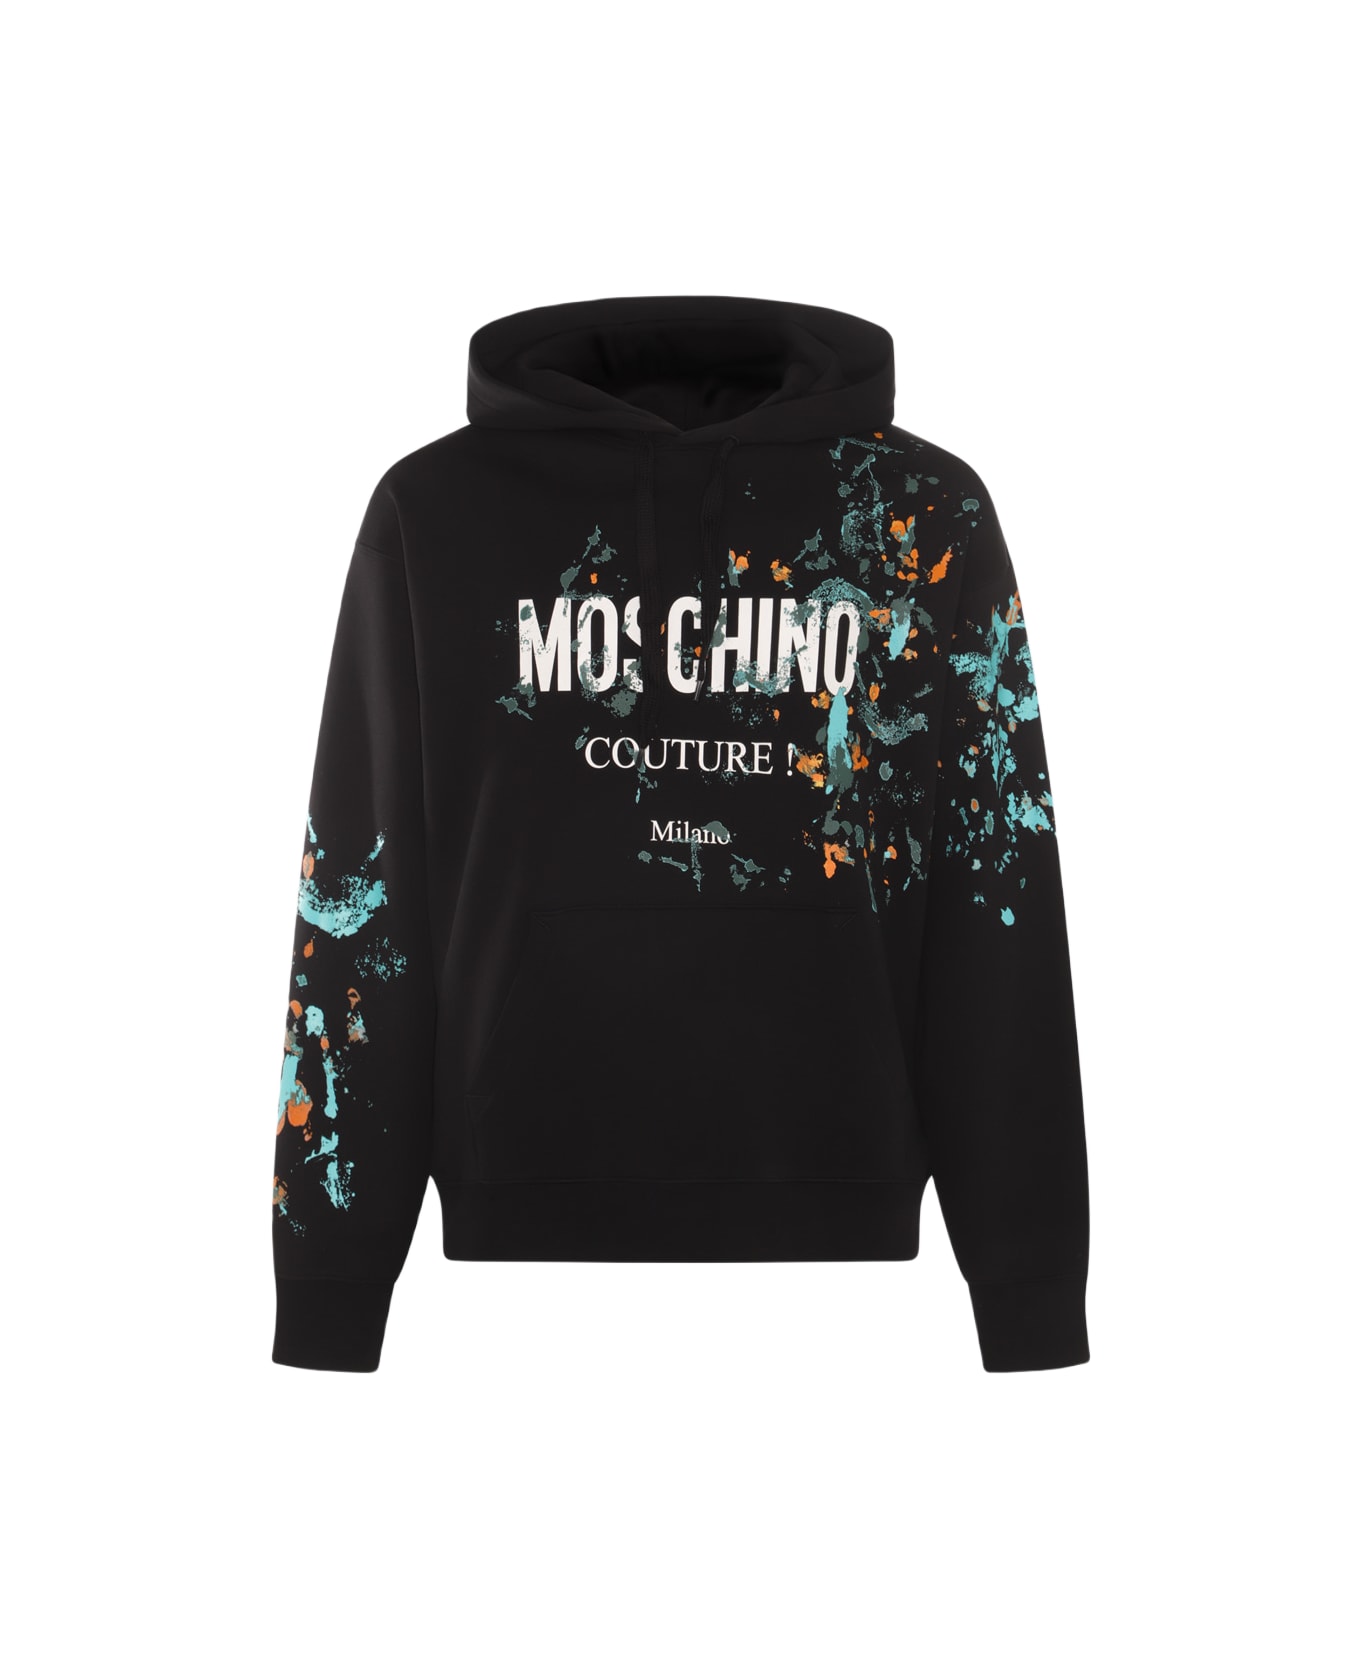 Moschino Black Cotton Sweatshirt - Black